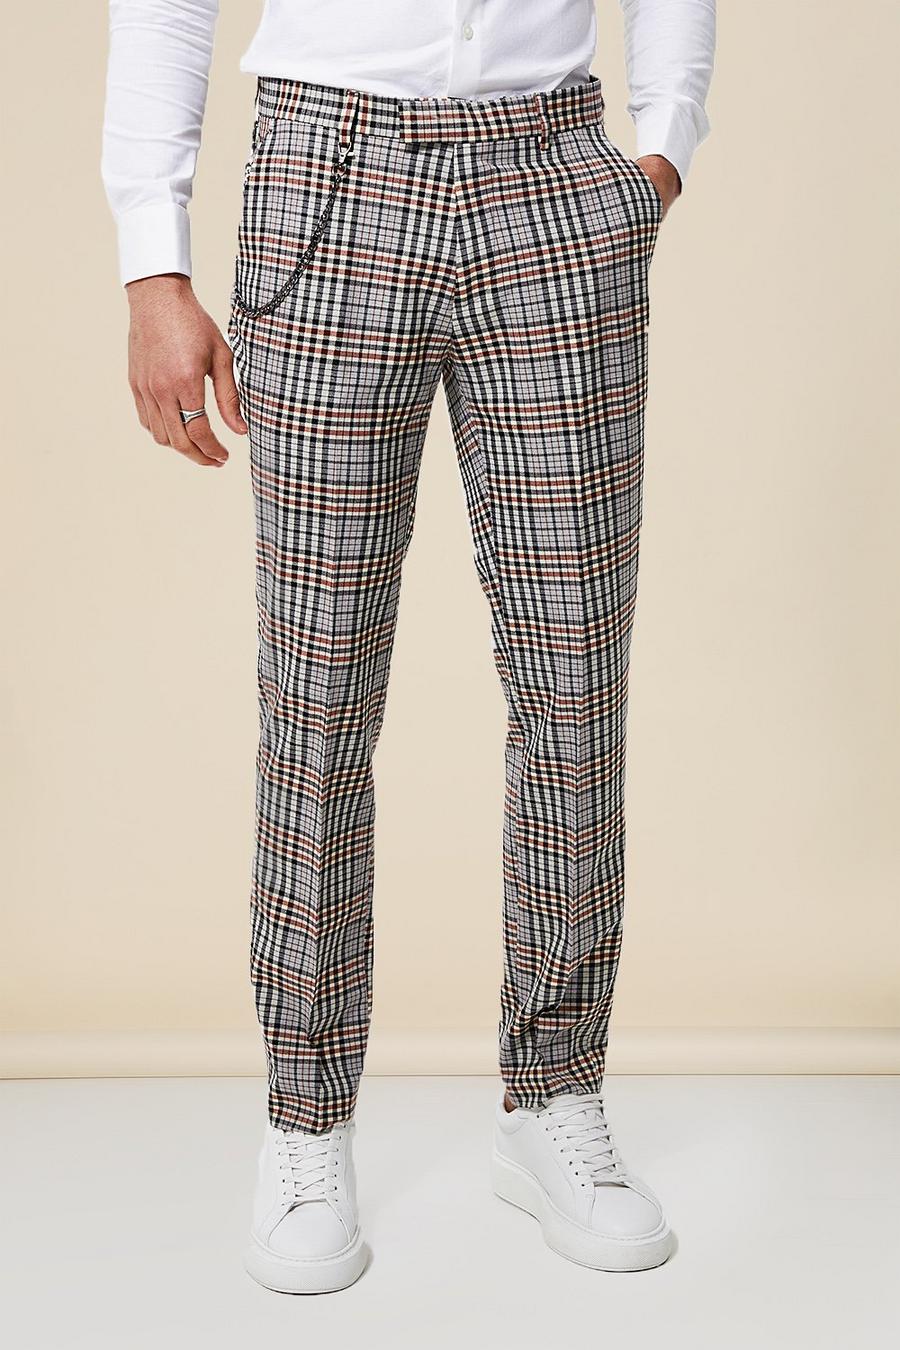 Grey grigio מכנסי קרופ בגזרת סקיני עם הדפס משבצות ושרשרת